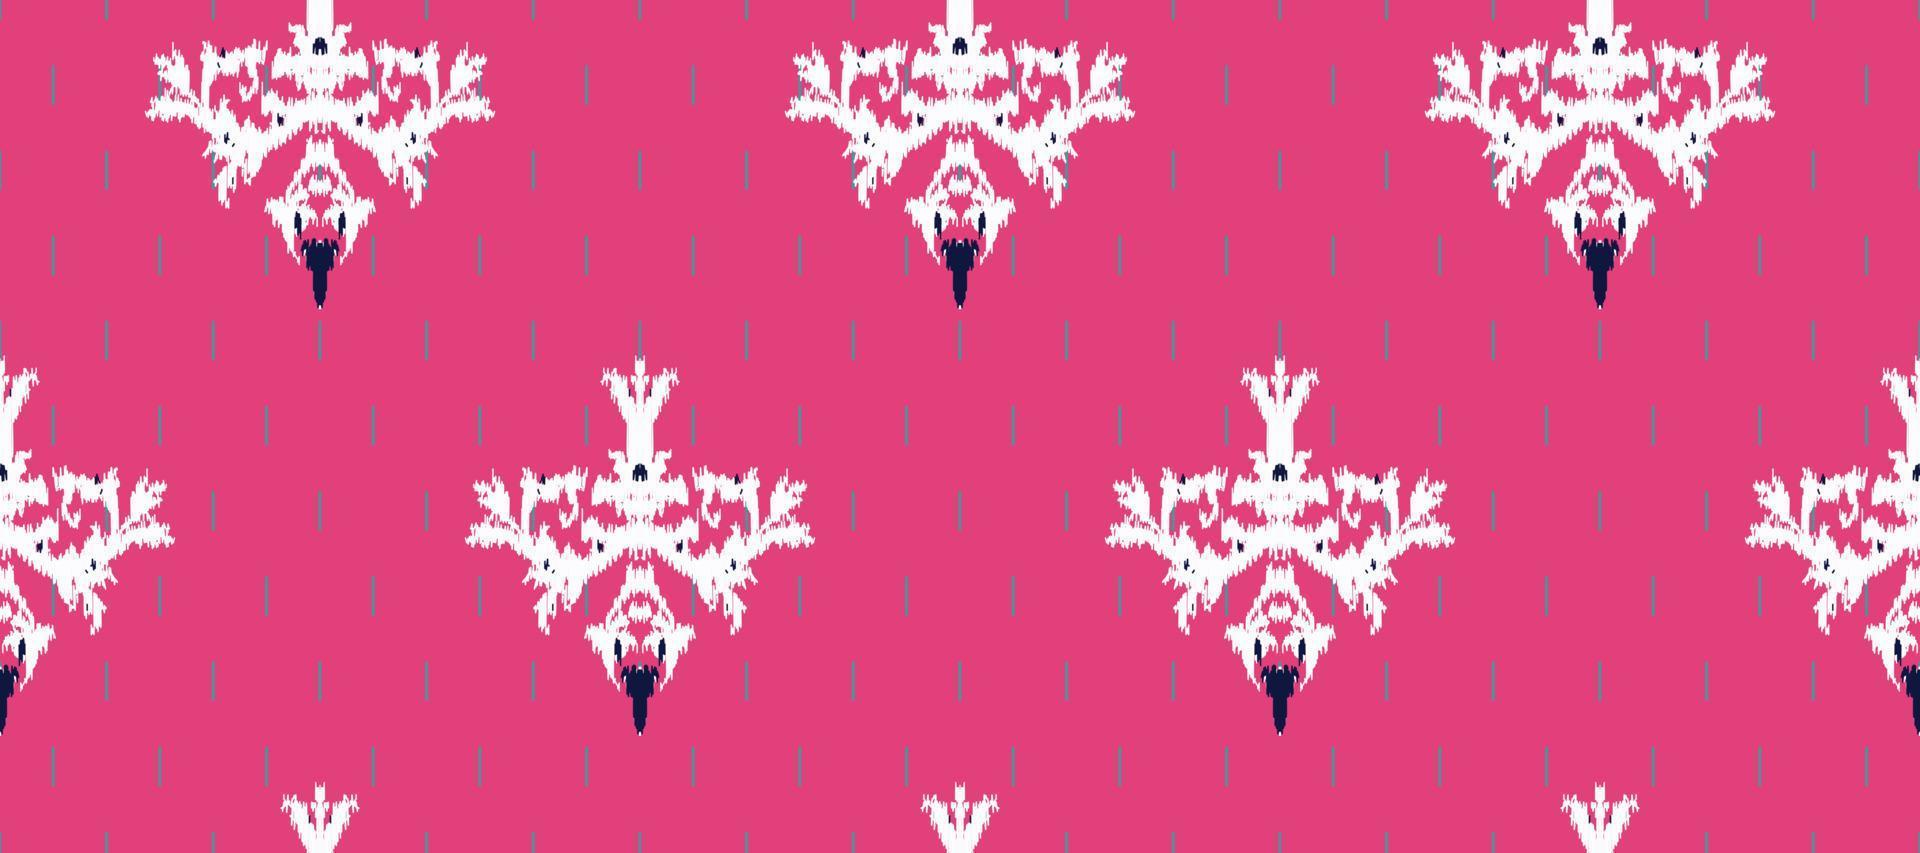 africano ikat cachemir bordado. batik textil ikat floral sin costura modelo digital vector diseño para impresión sari curti borneo tela frontera cepillo fiesta vestir